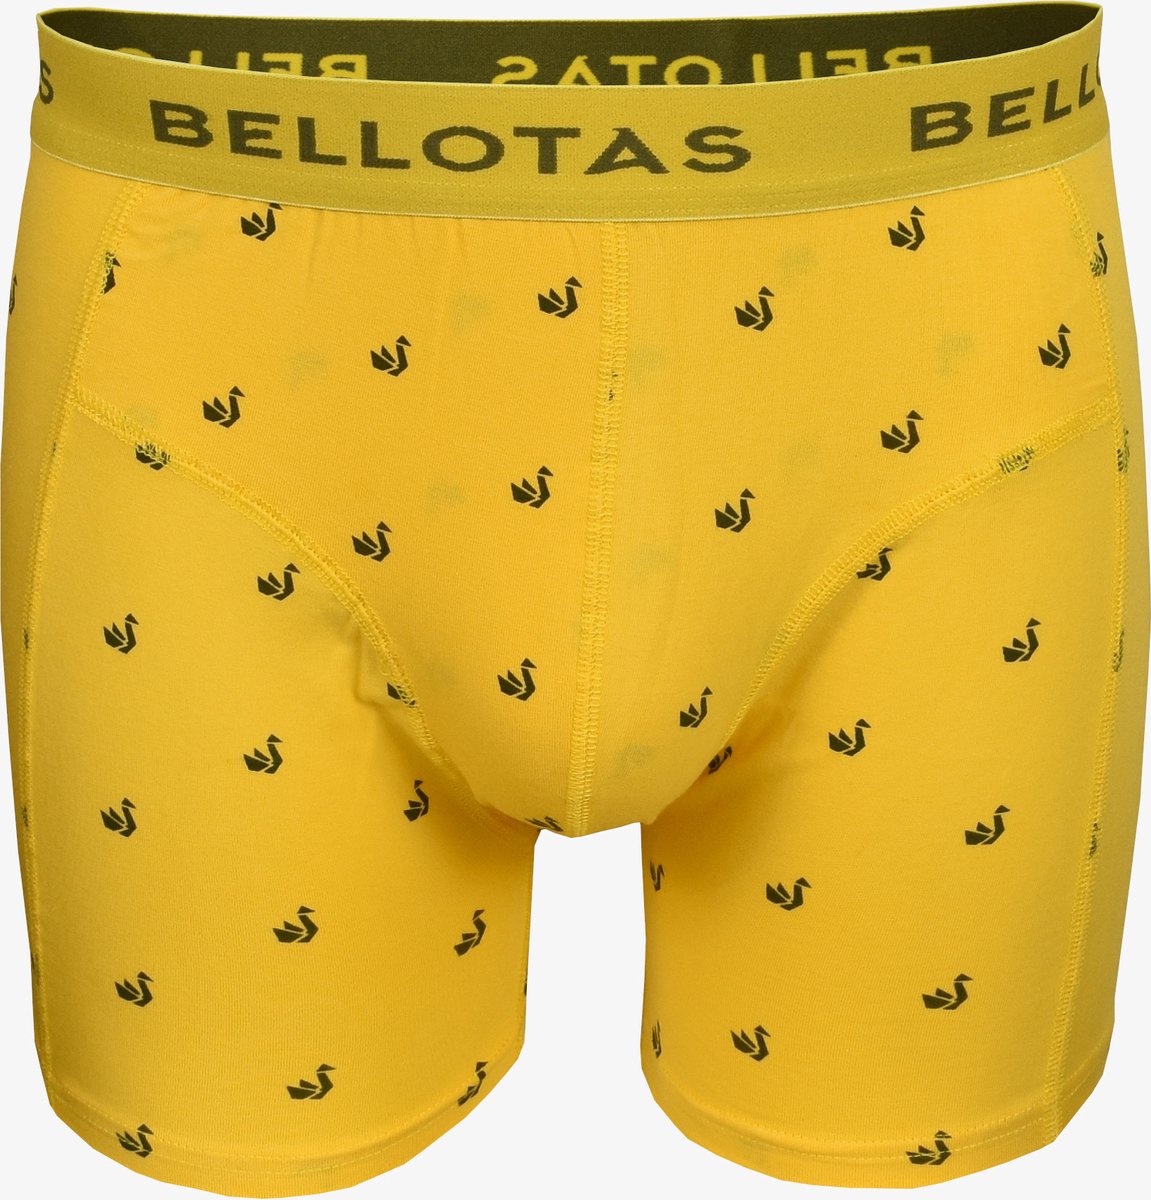 Bellotas - Boxershort - Odile M